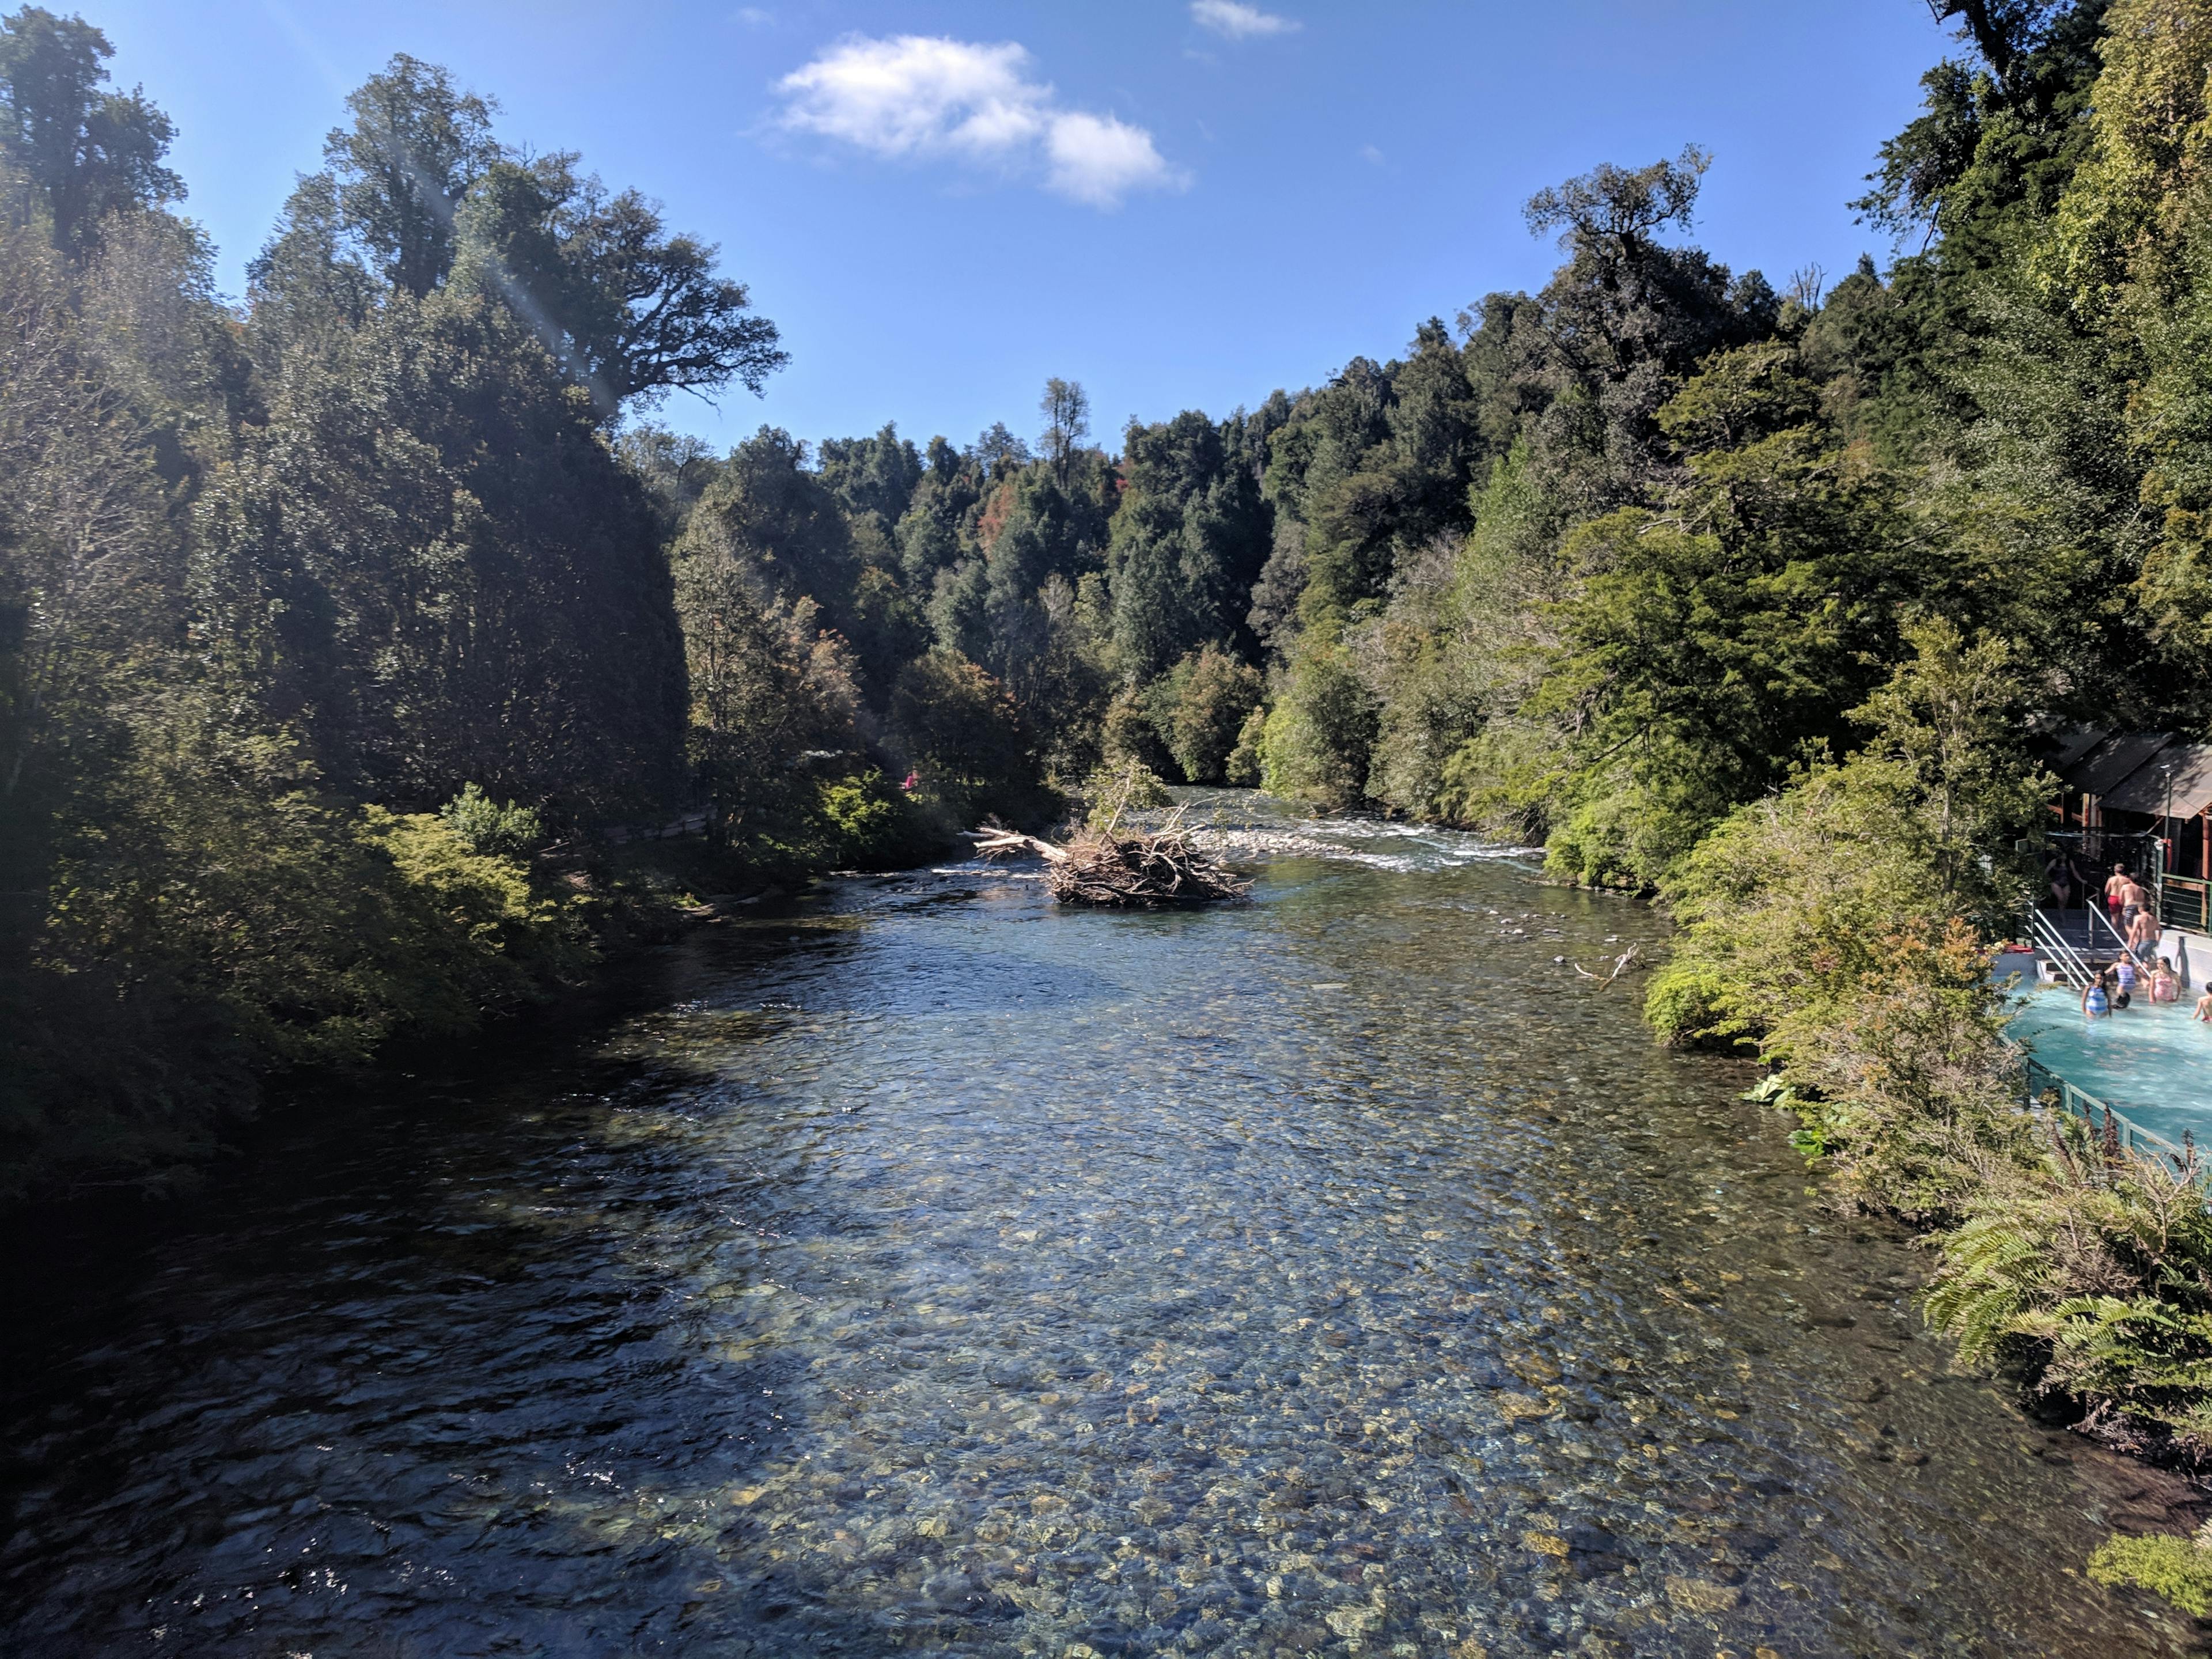 Calm river near the hot springs